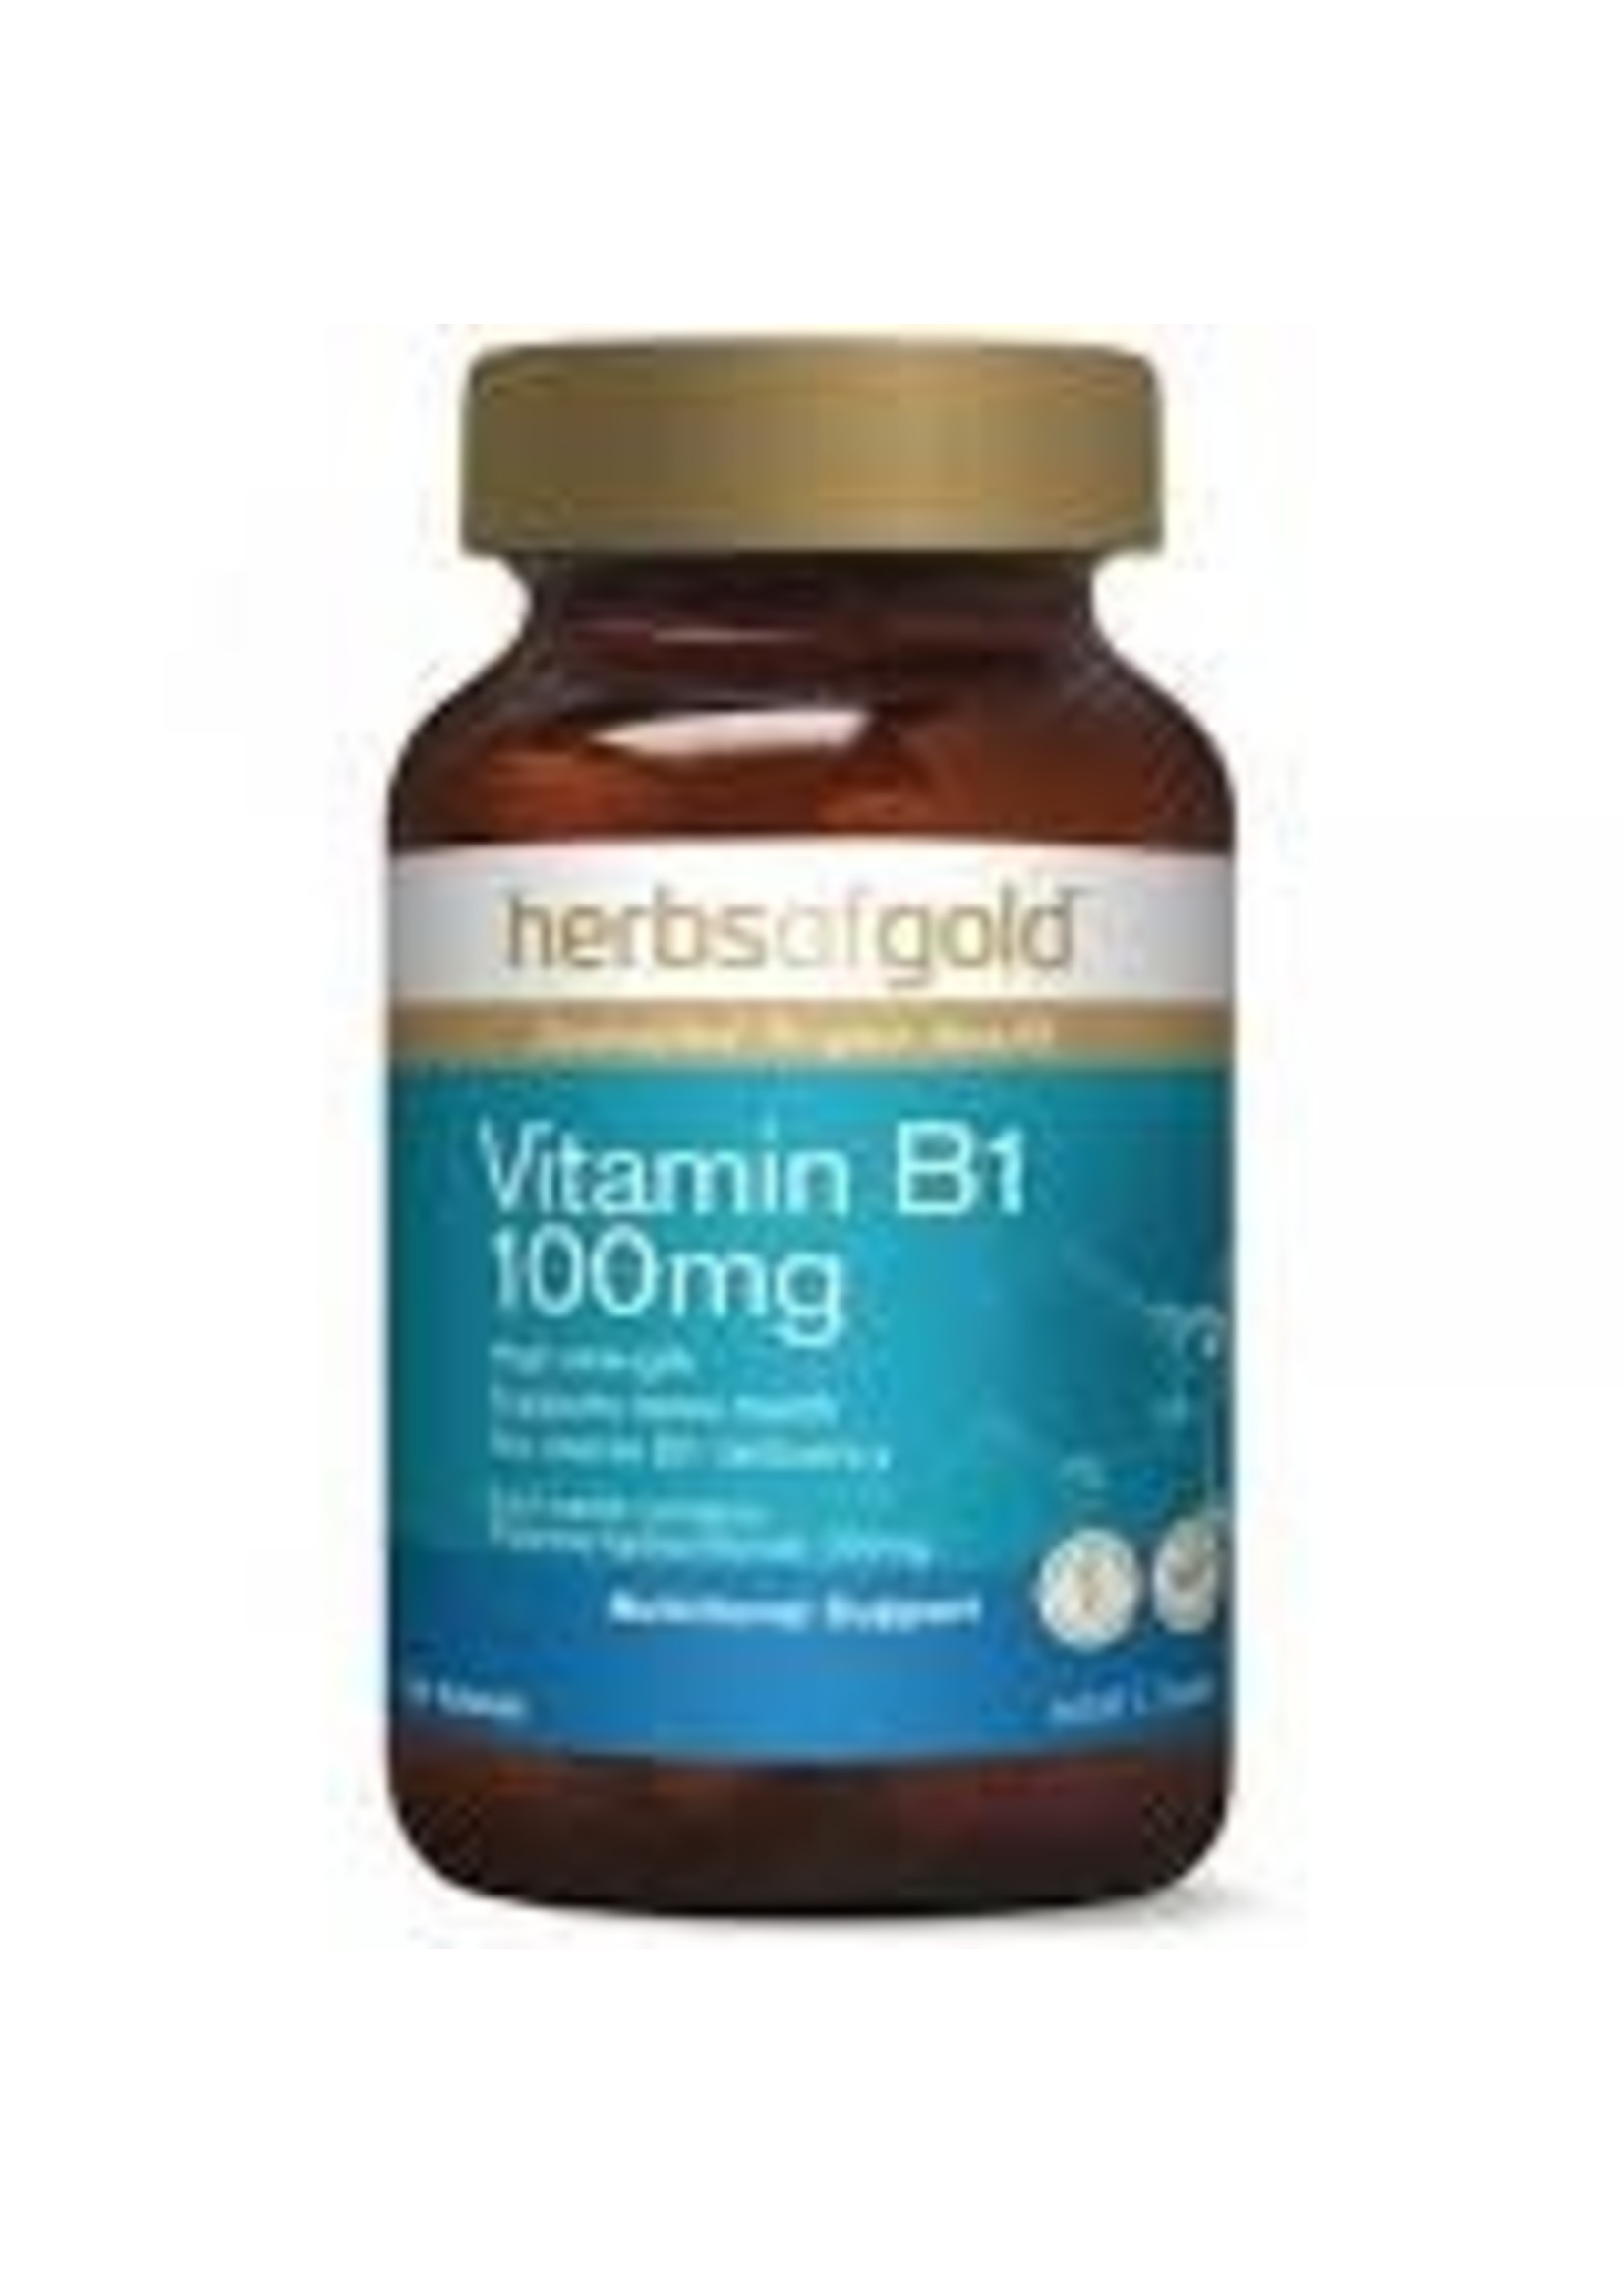 Herbs of Gold Herbs of Gold Vitamin B1 100mg 100 tabs